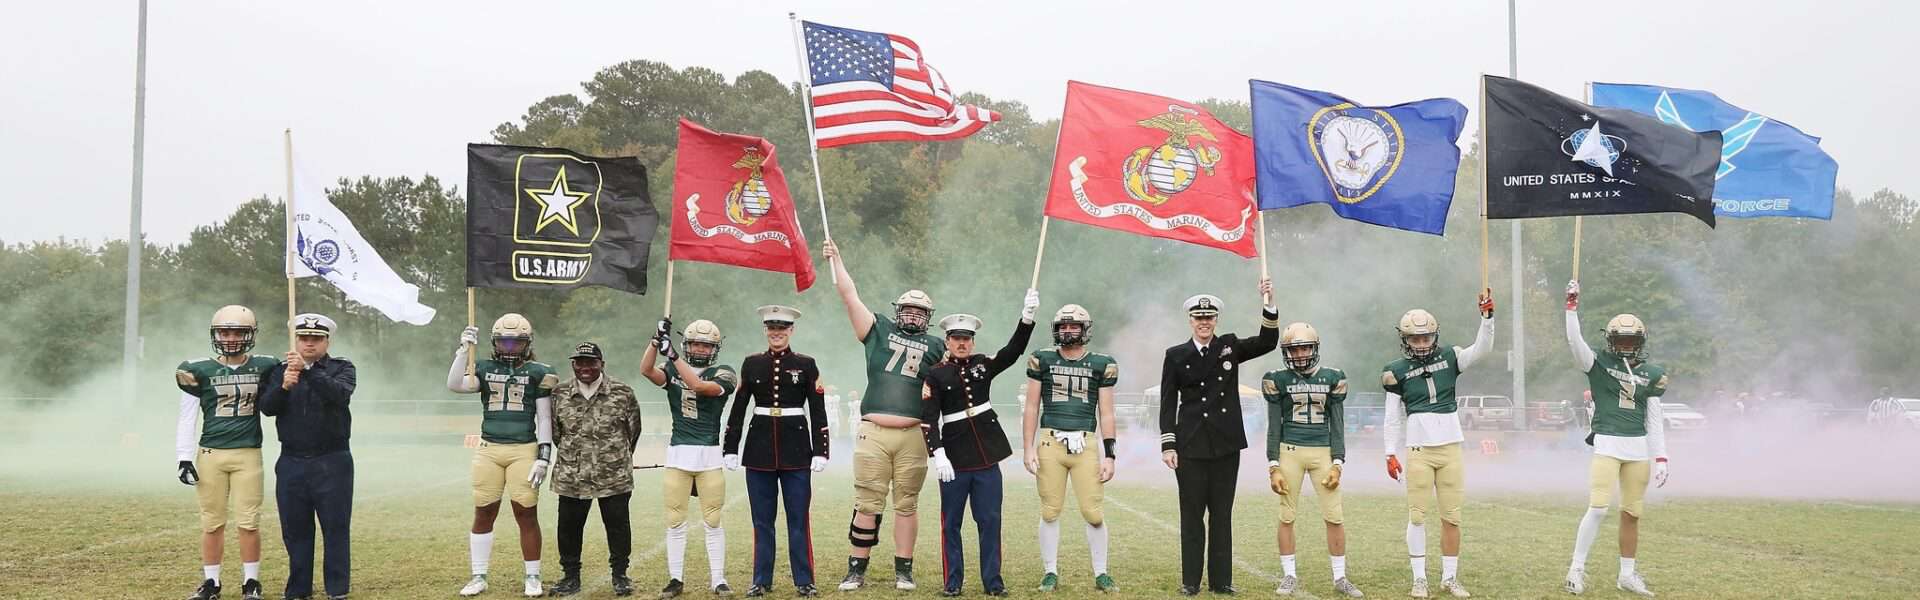 Catholic school students honor U.S. Military members